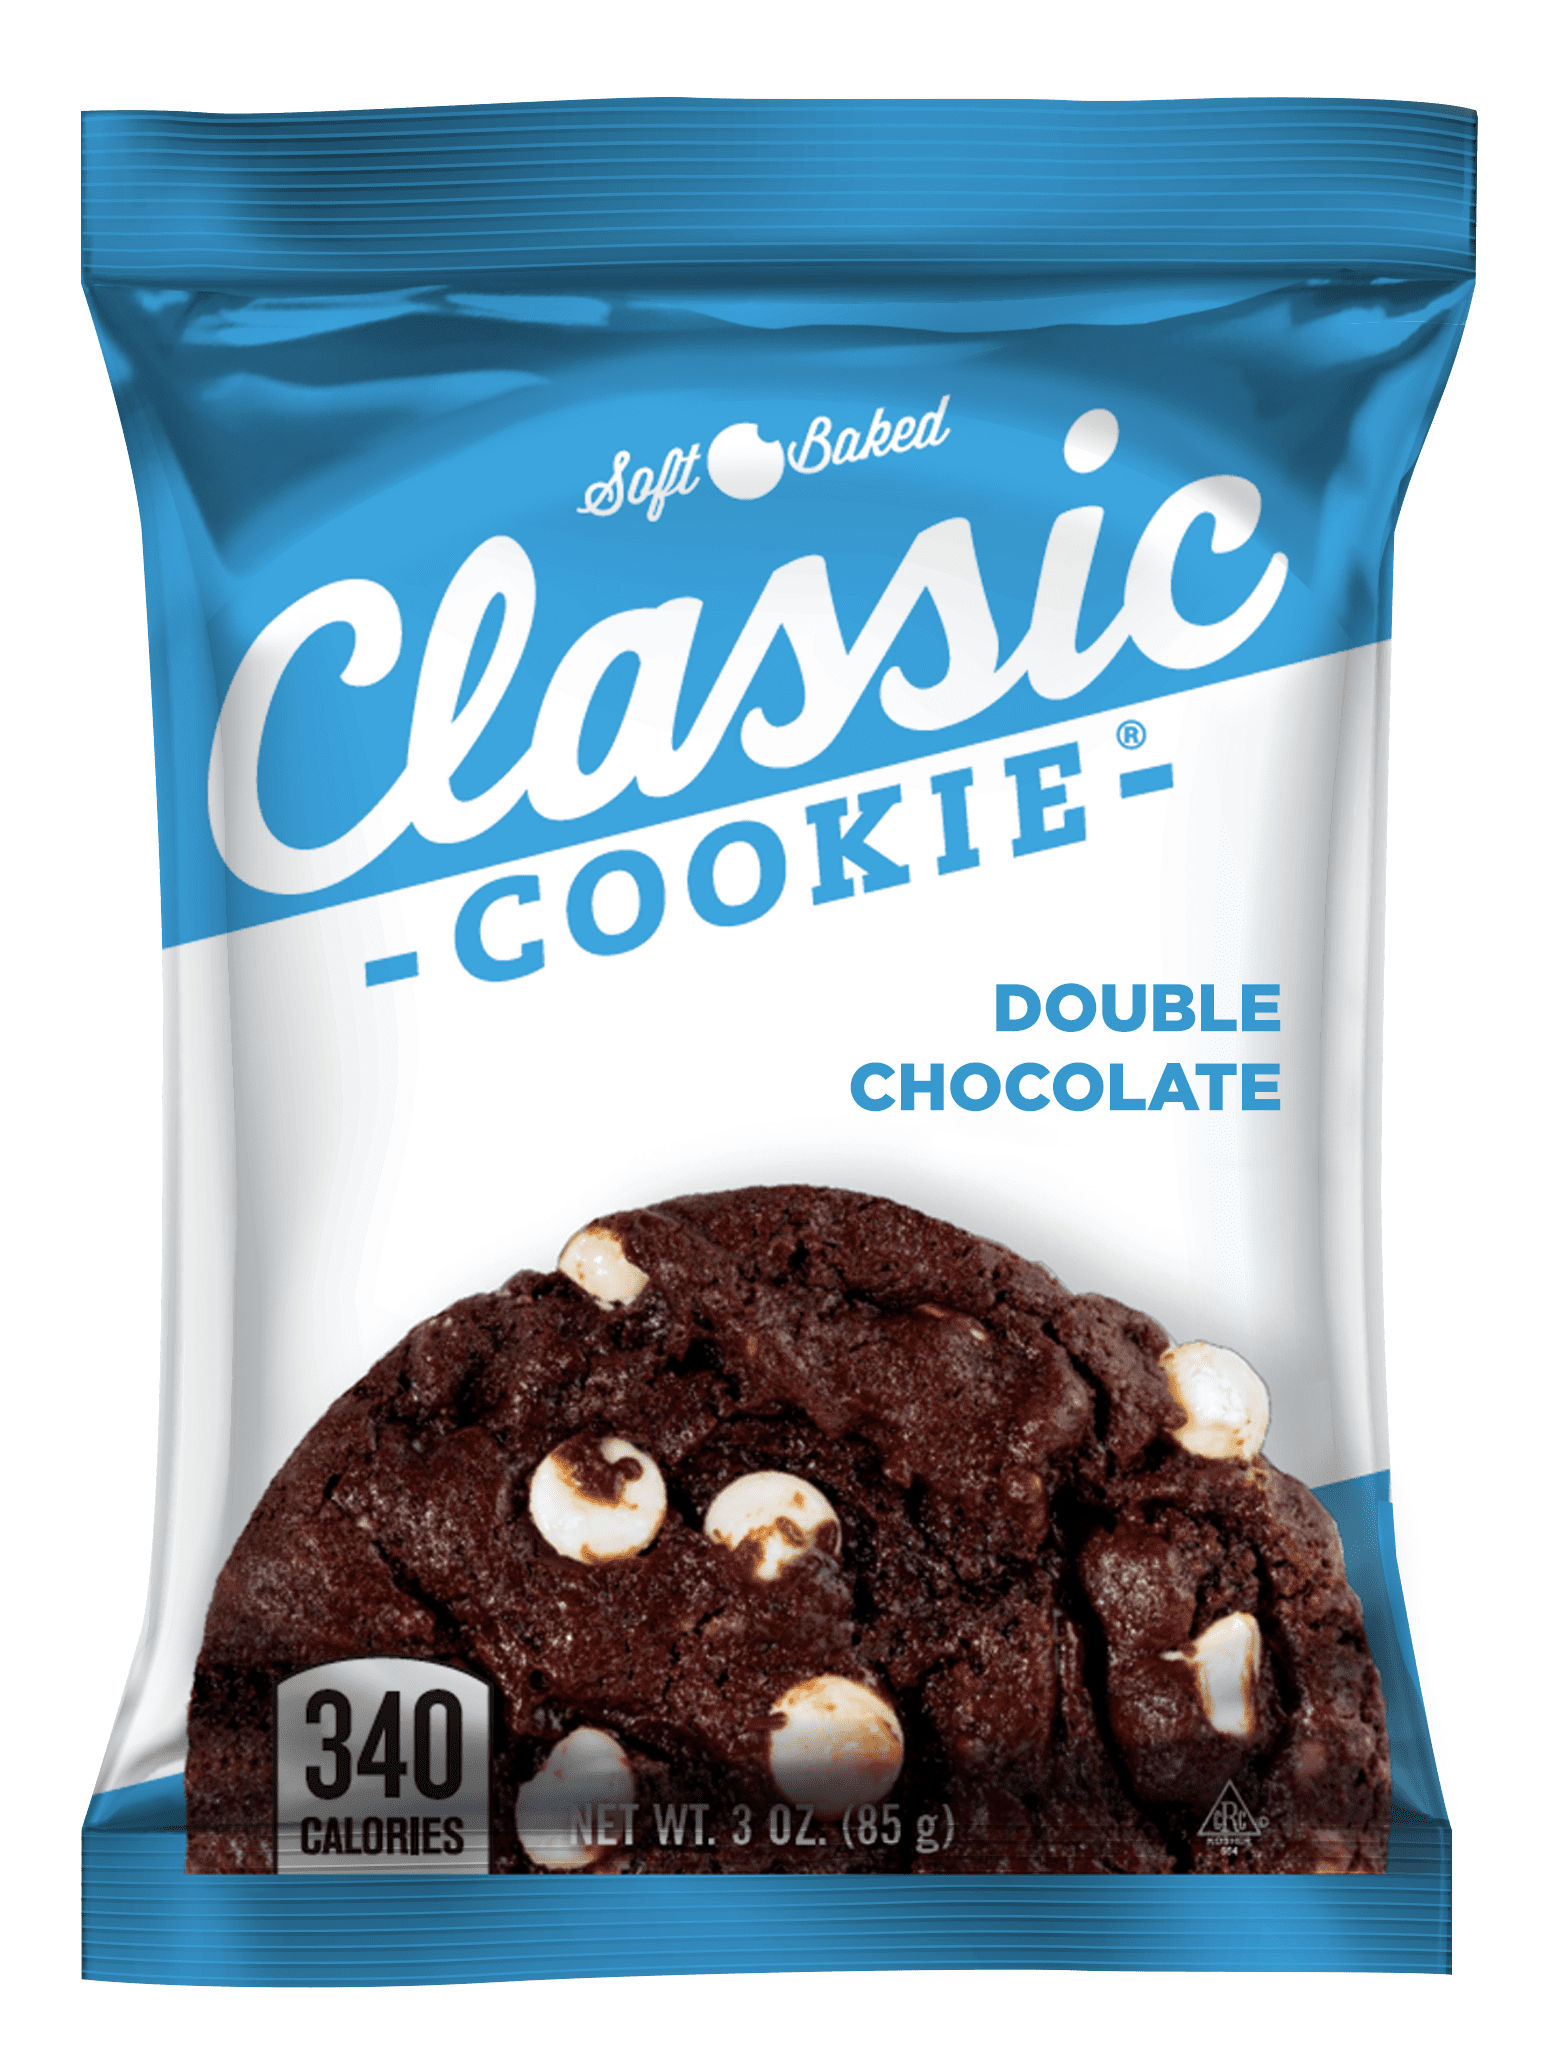 Classic Cookie, Peanut Butter, Soft Baked 3 oz, Shop